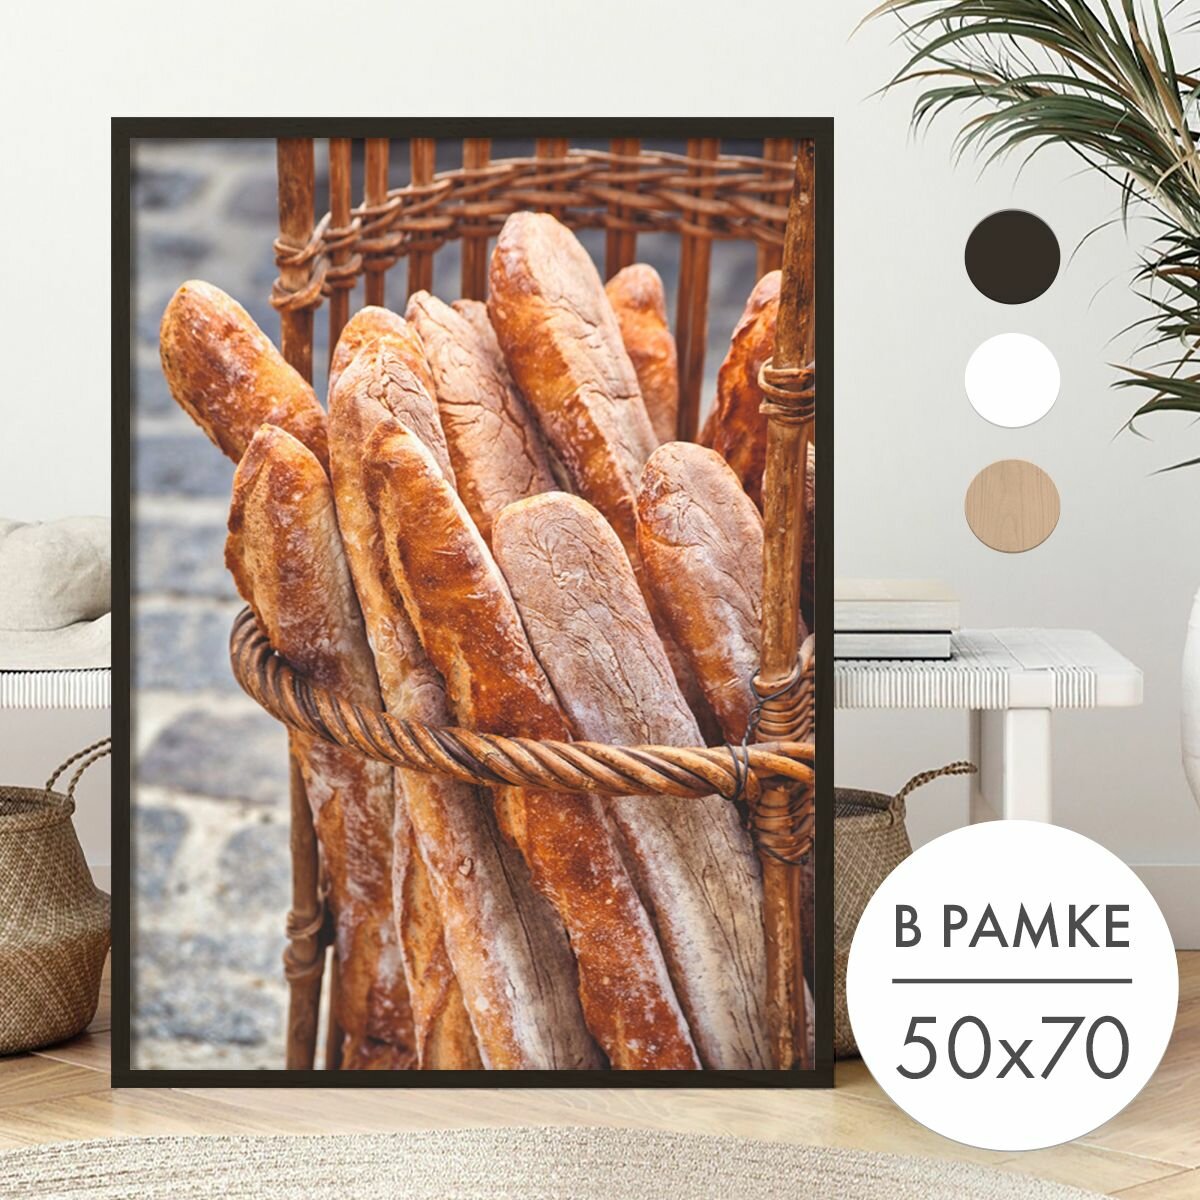 Постер 50х70 В рамке "Французский багет" для интерьера